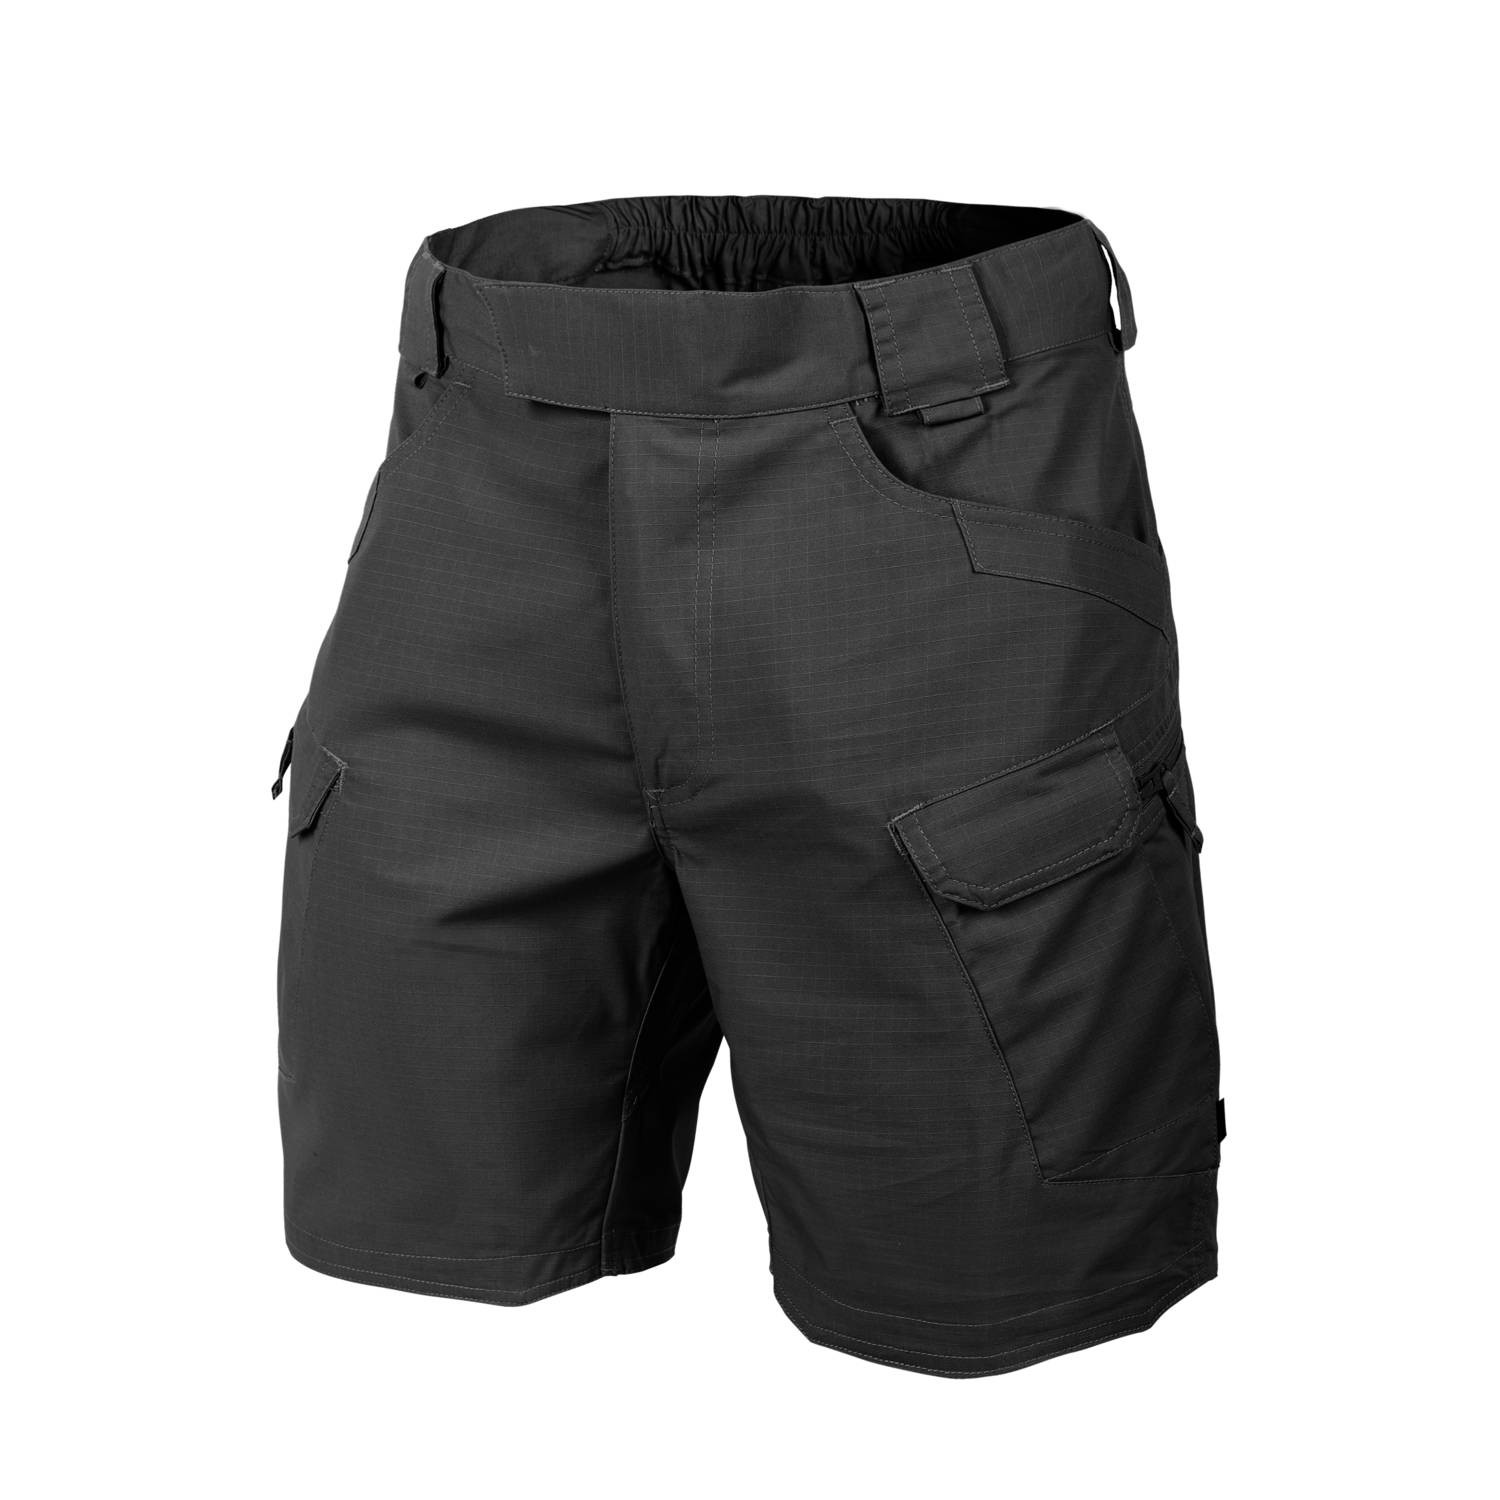 UTS (Urban Tactical Shorts) 8.5 ® - PolyCotton Ripstop - Helikon Tex